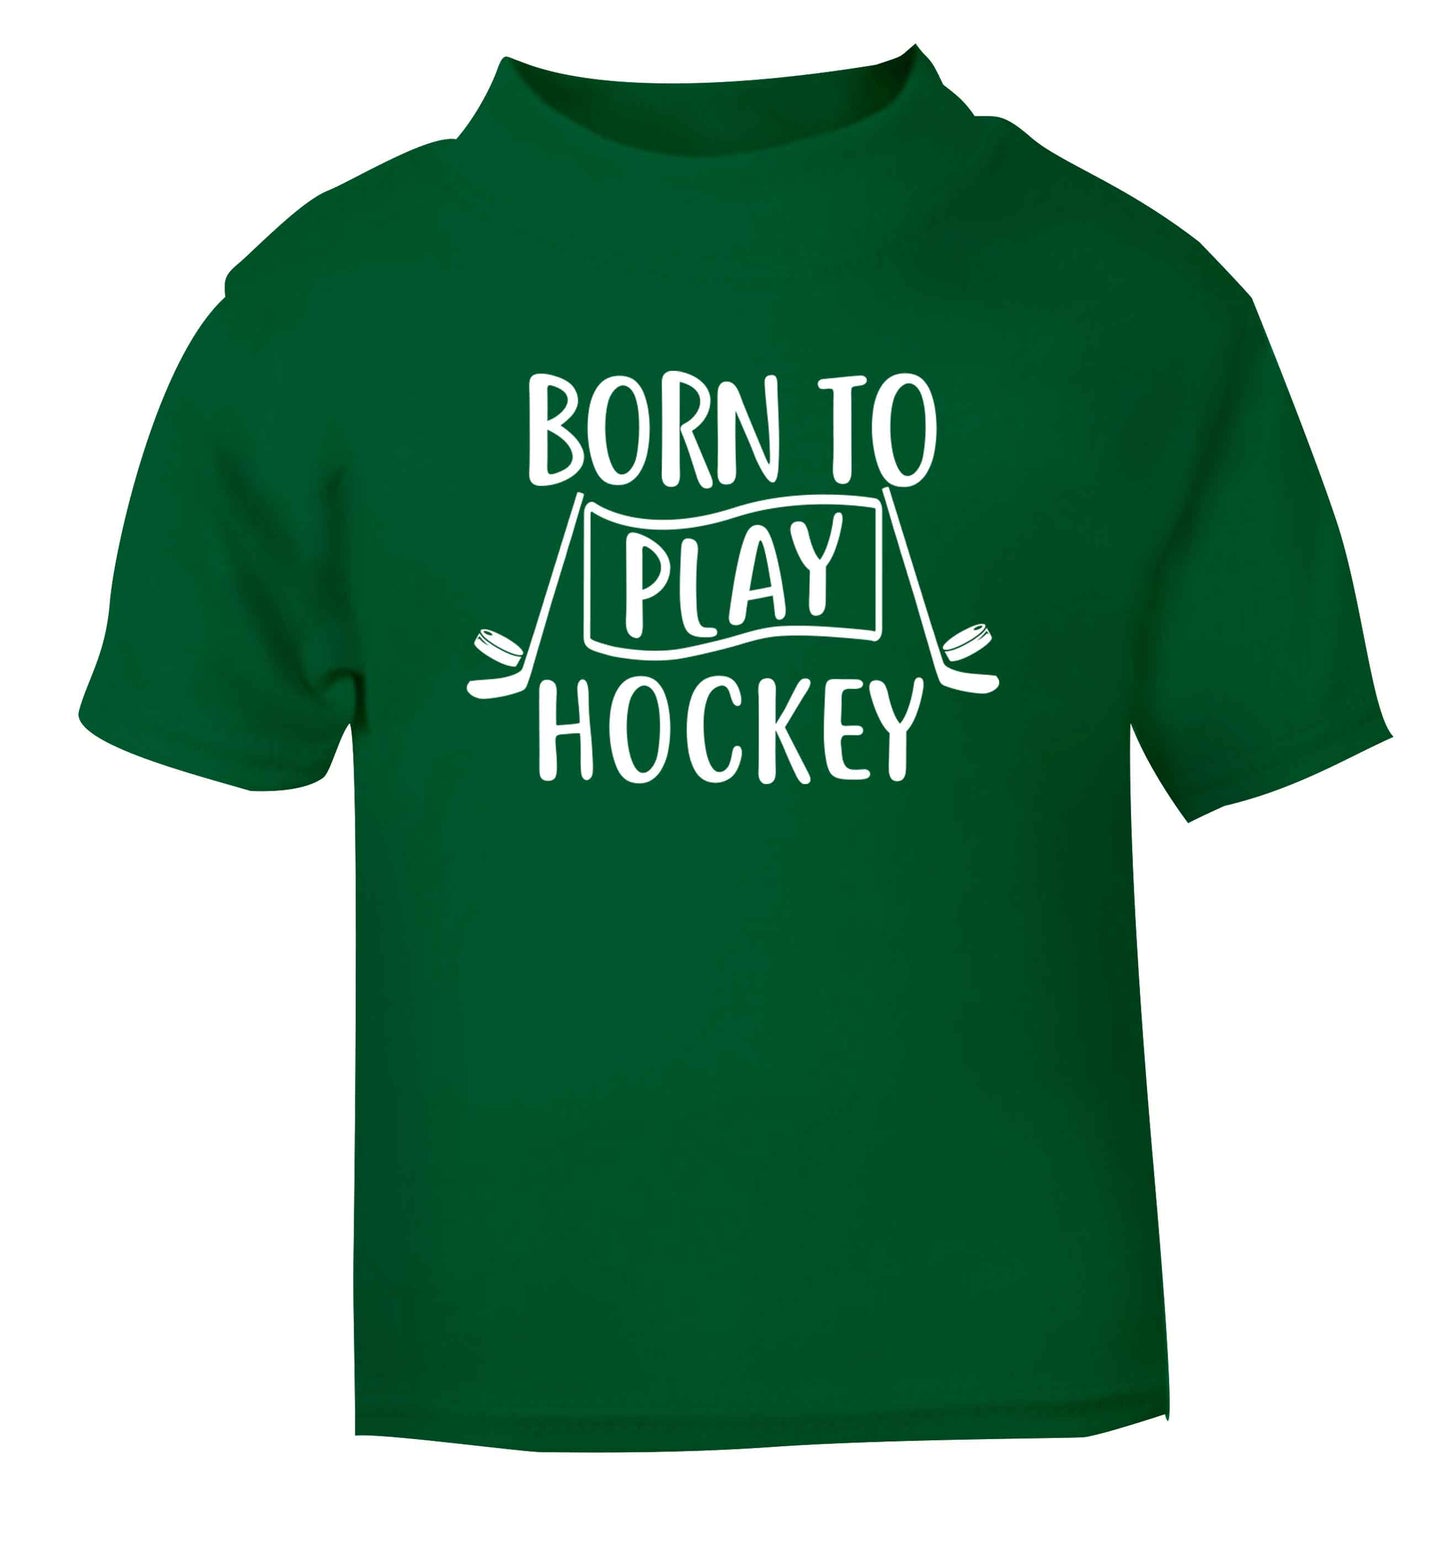 Born to play hockey green Baby Toddler Tshirt 2 Years